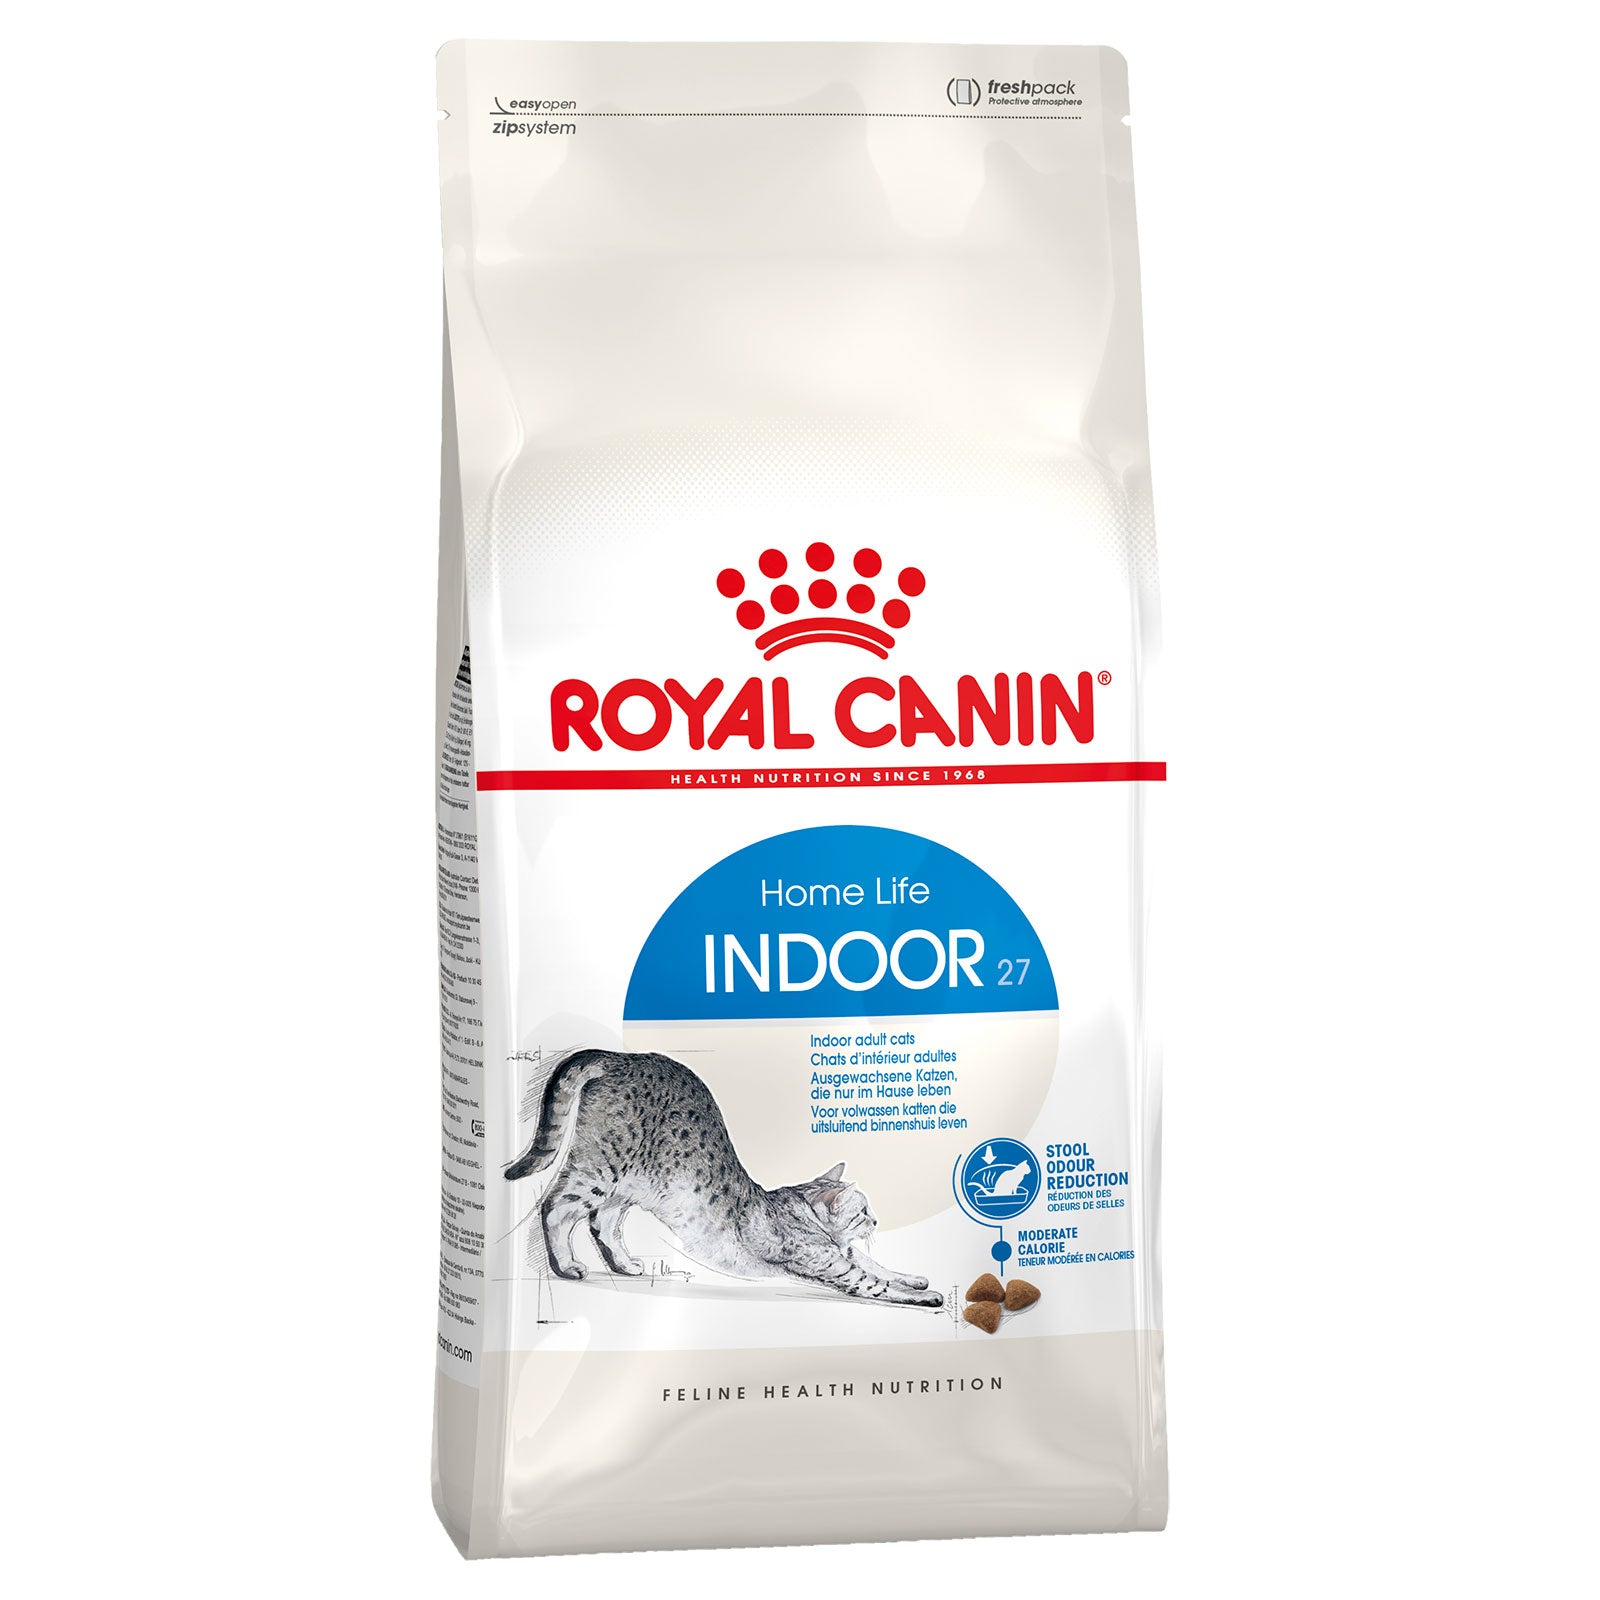 Royal Canin Cat Food Adult Indoor